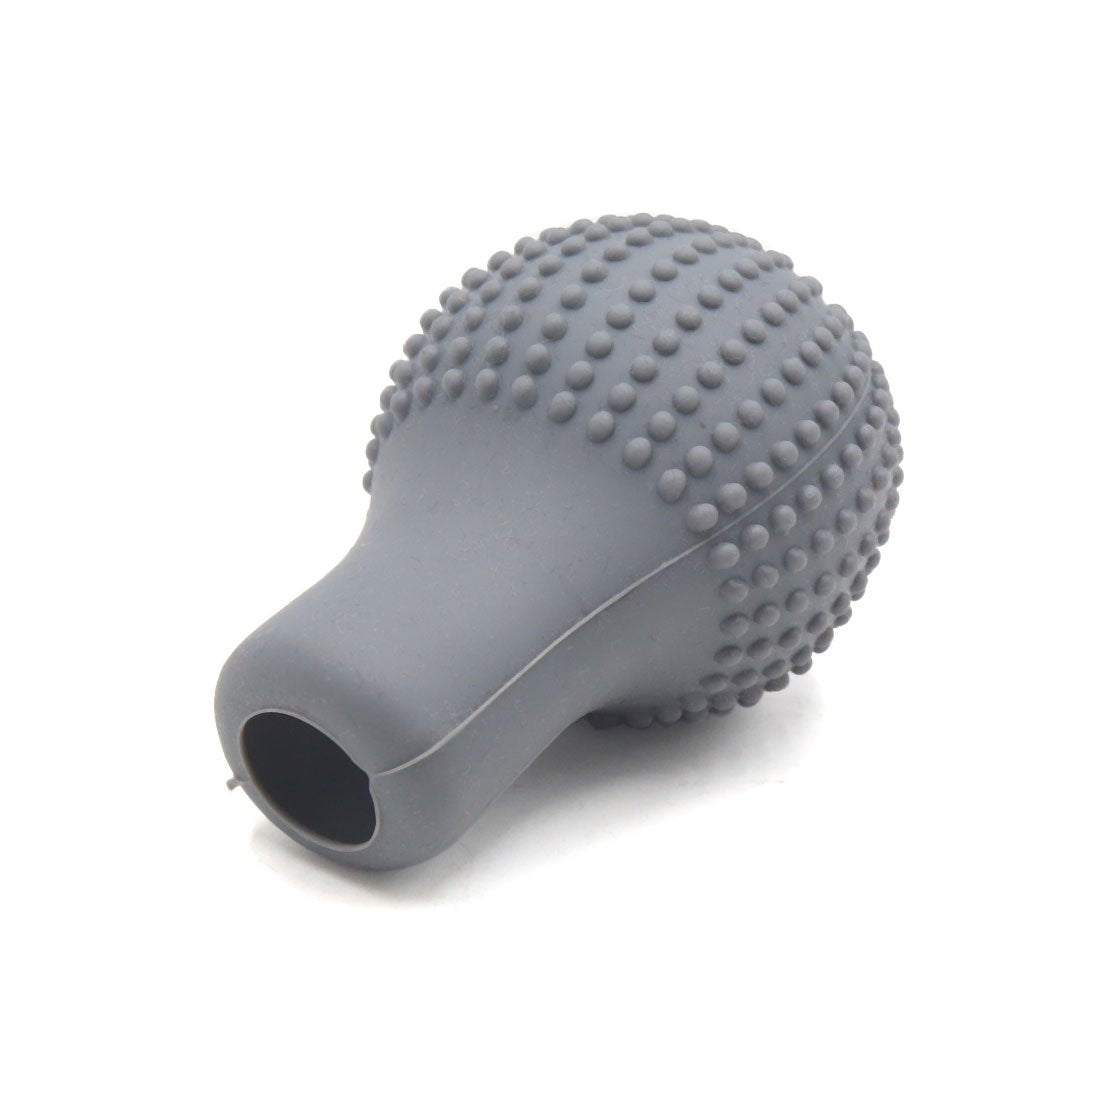 CarOxygen - Anti-Scratch Universal Fit Silicon Gear Knob Protective Bump Shift Knob Cover (Grey)